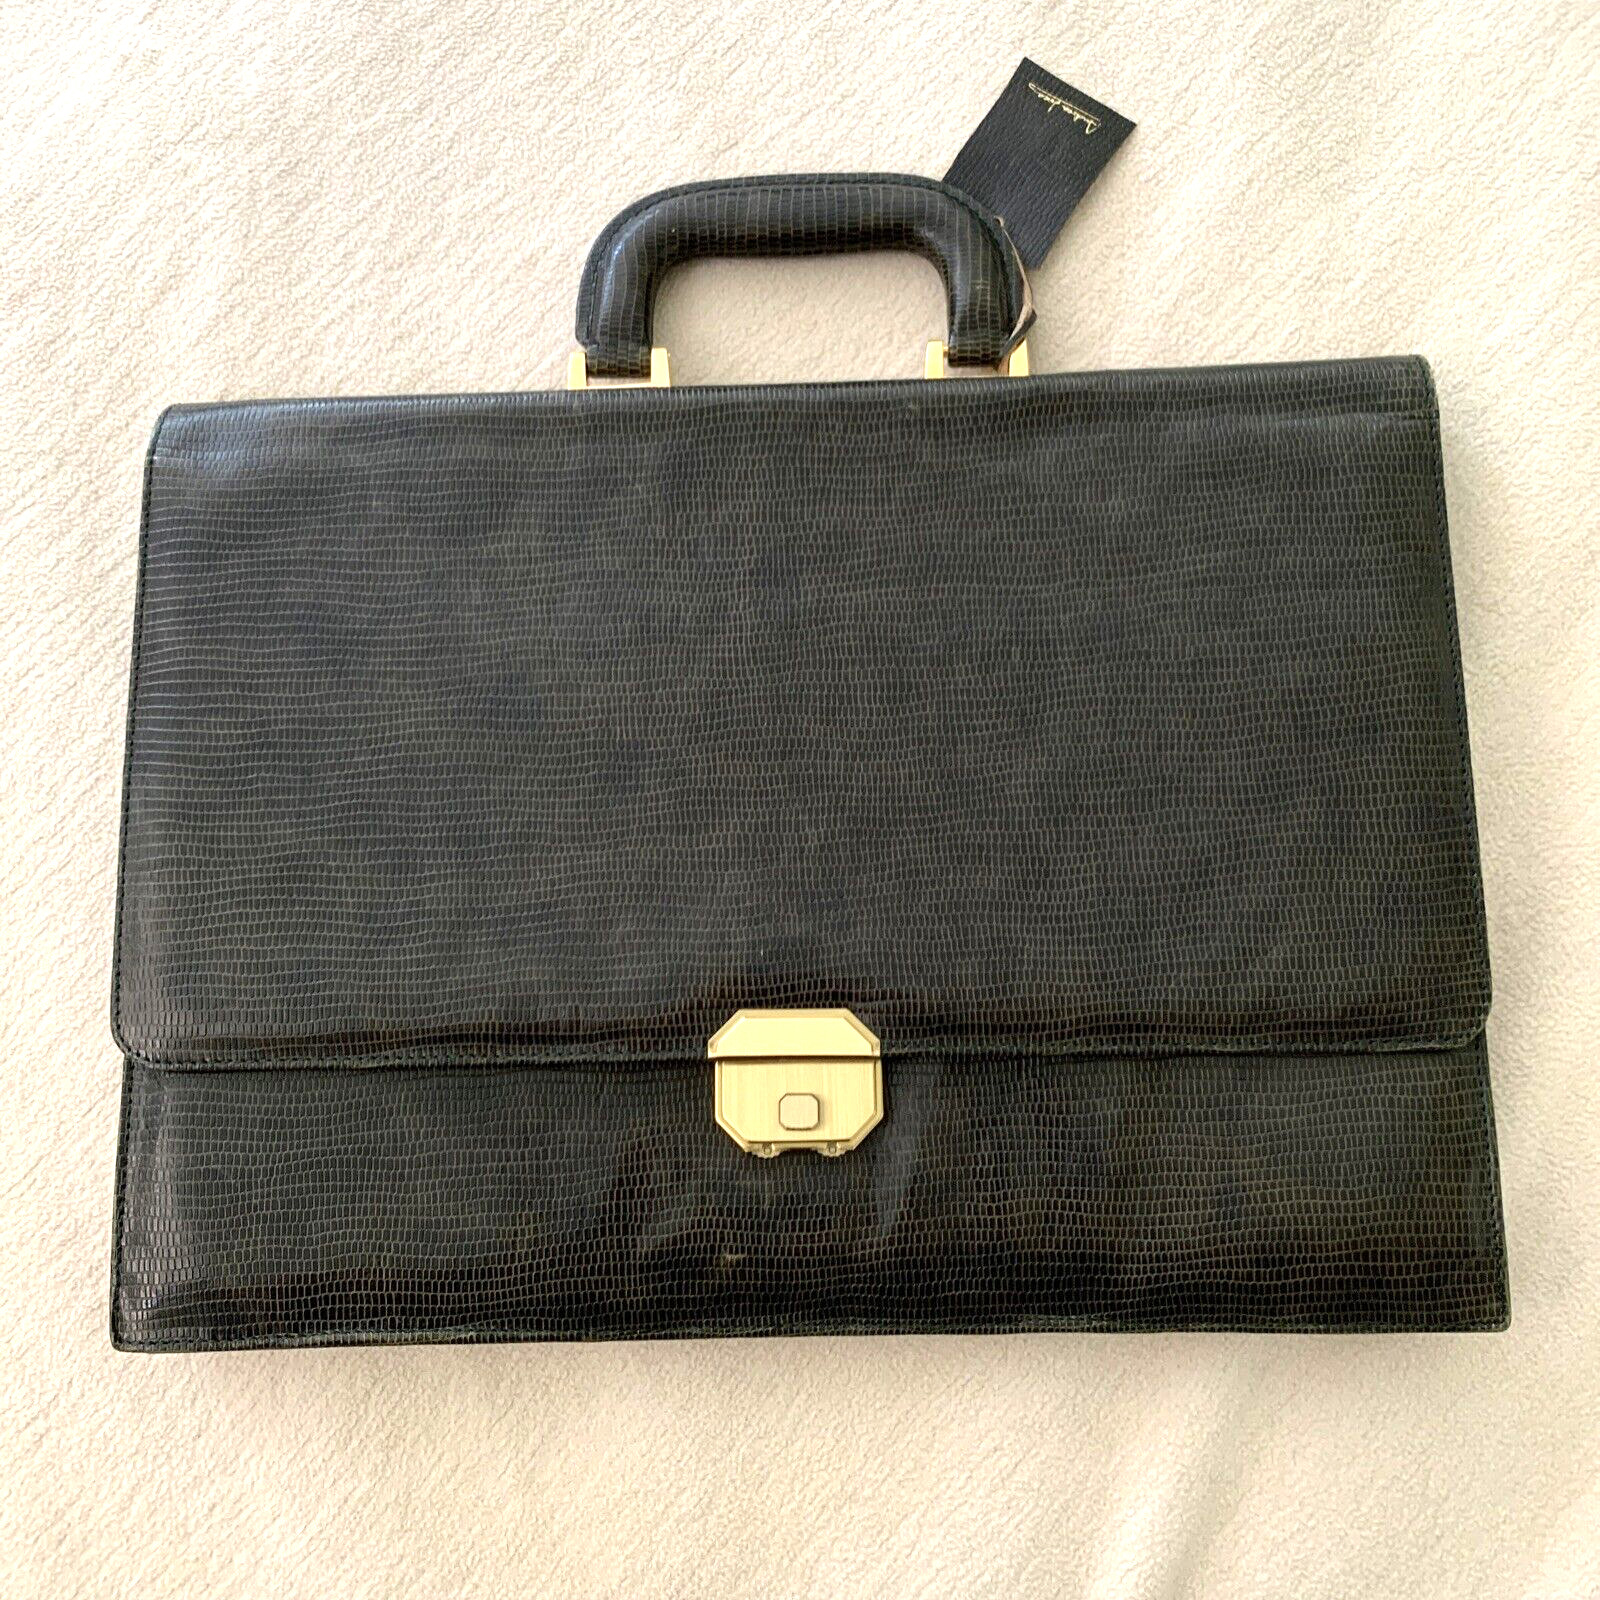 Vintage Lizard Skin Attache Briefcase with Amiet Swiss Made Coded Lock - Mint